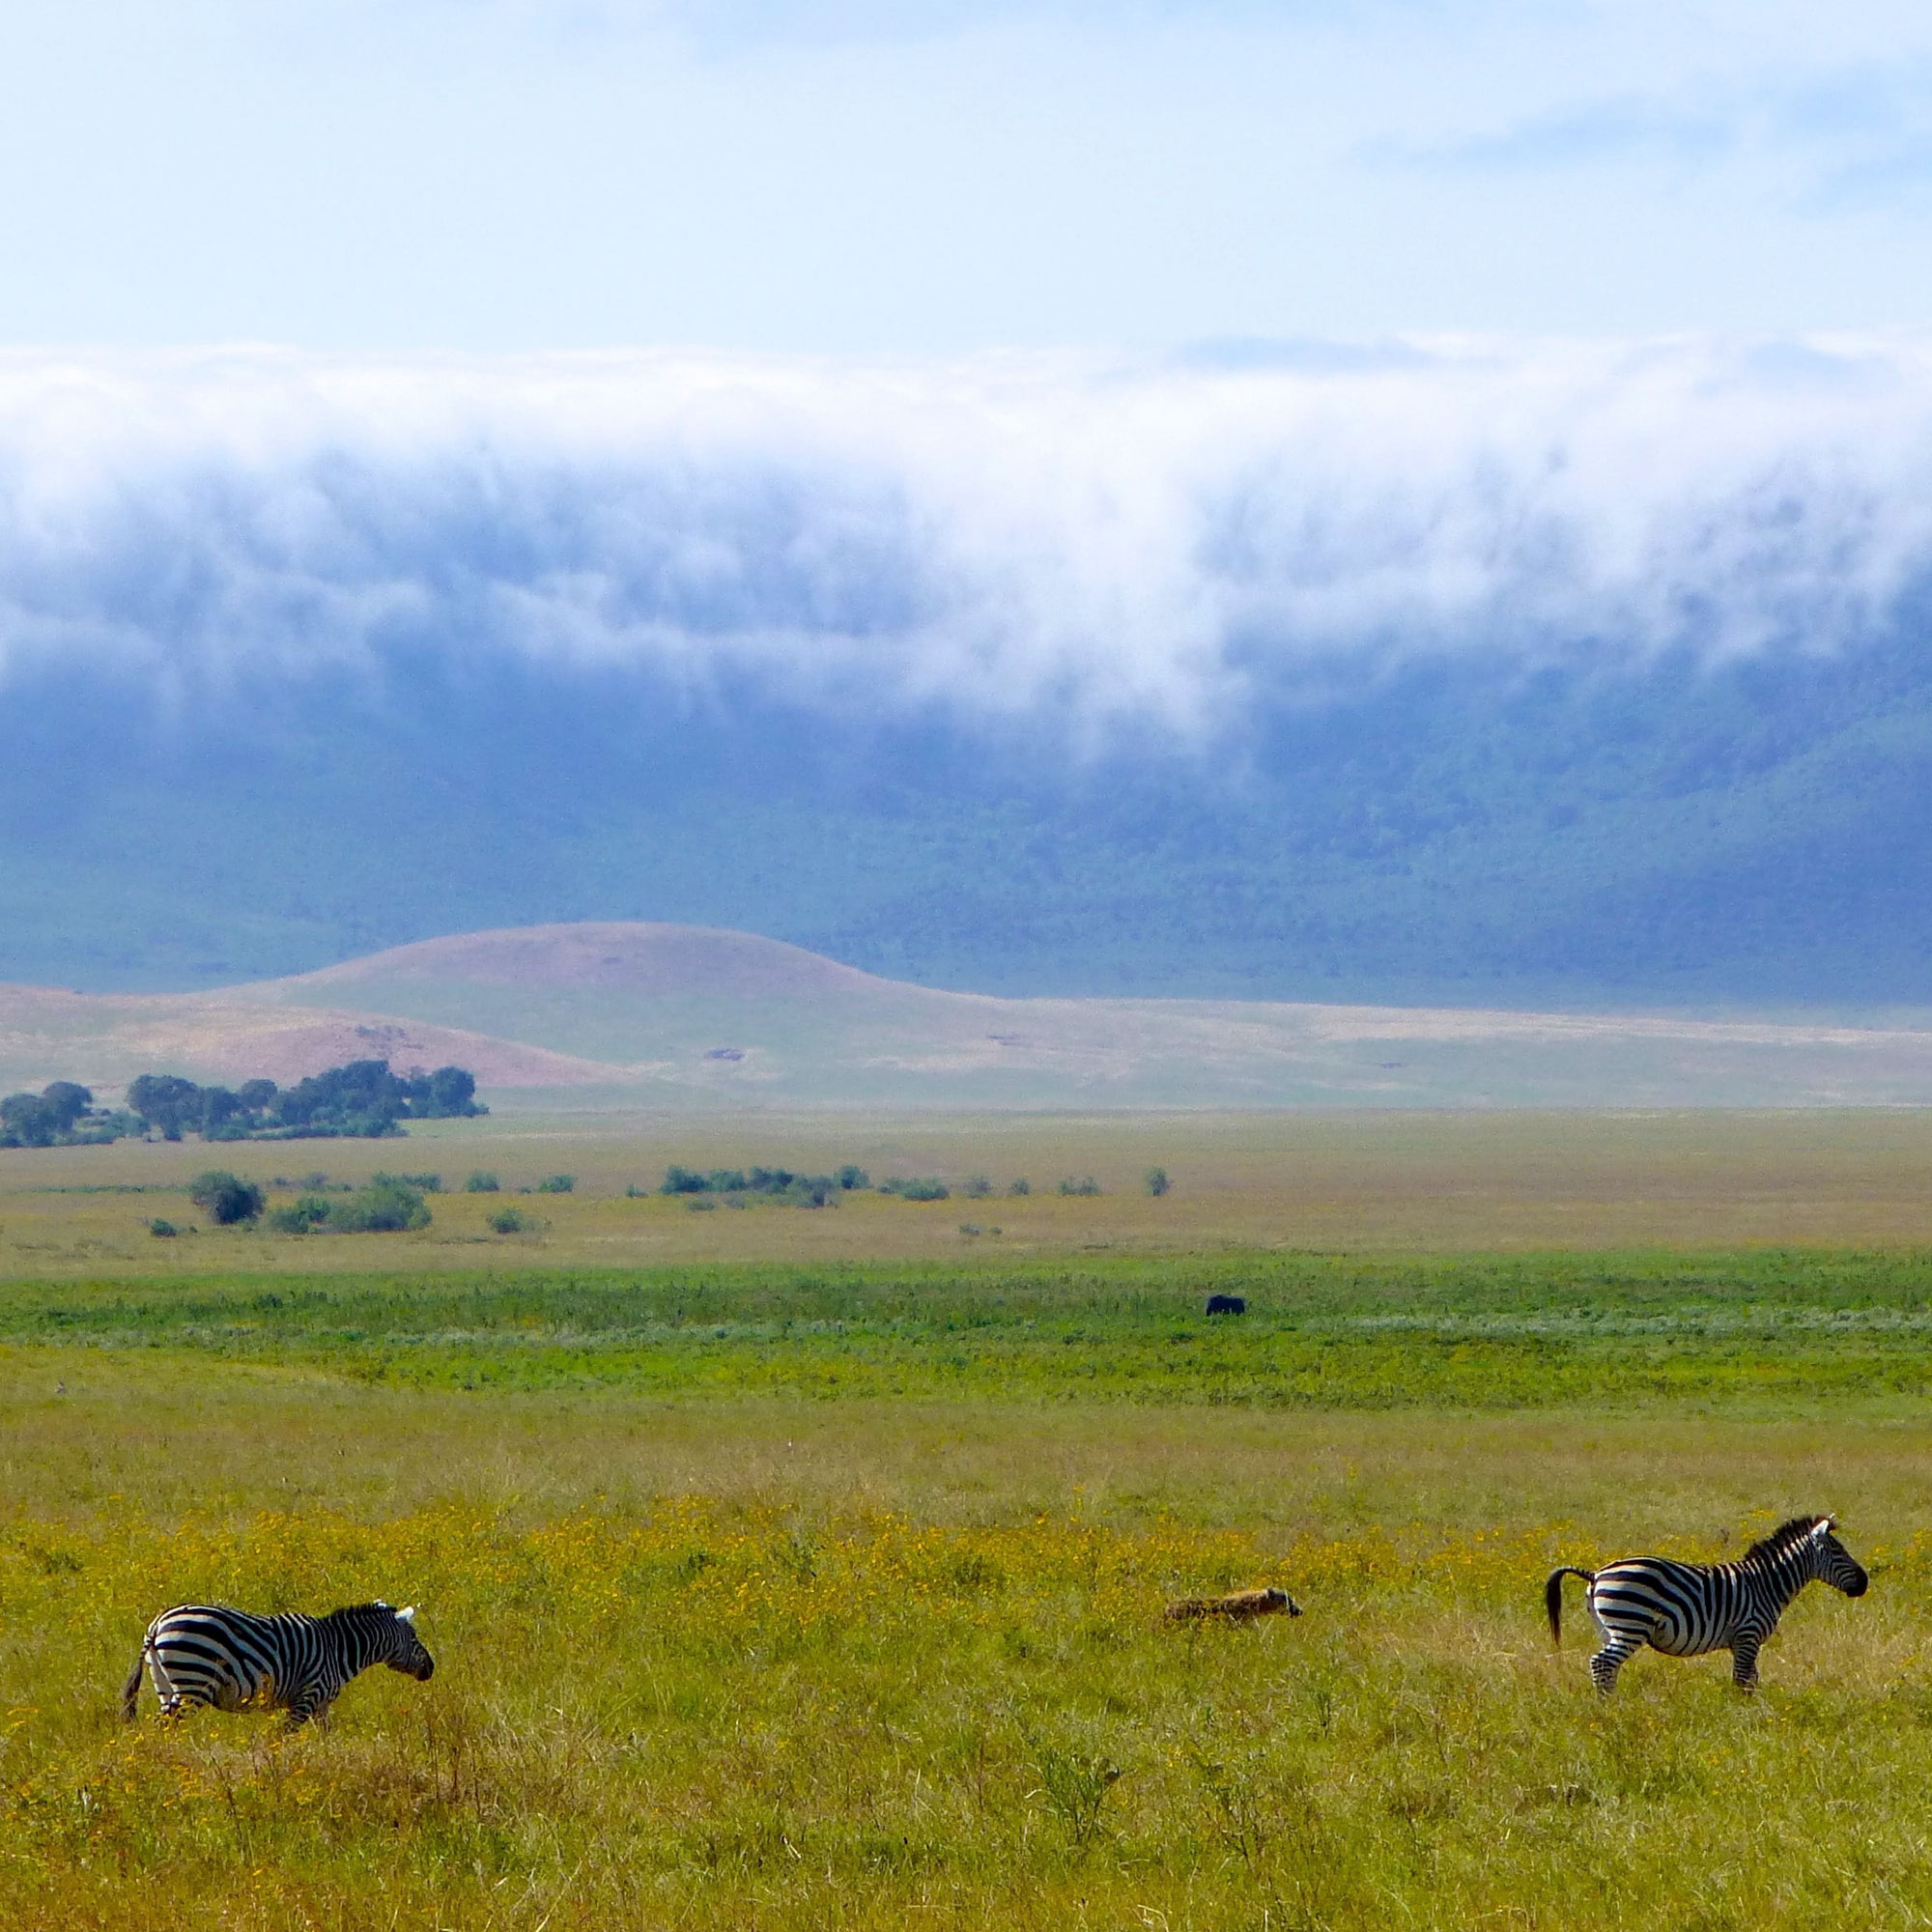 Travel to Ngorongoro crater with Boaz Adventure